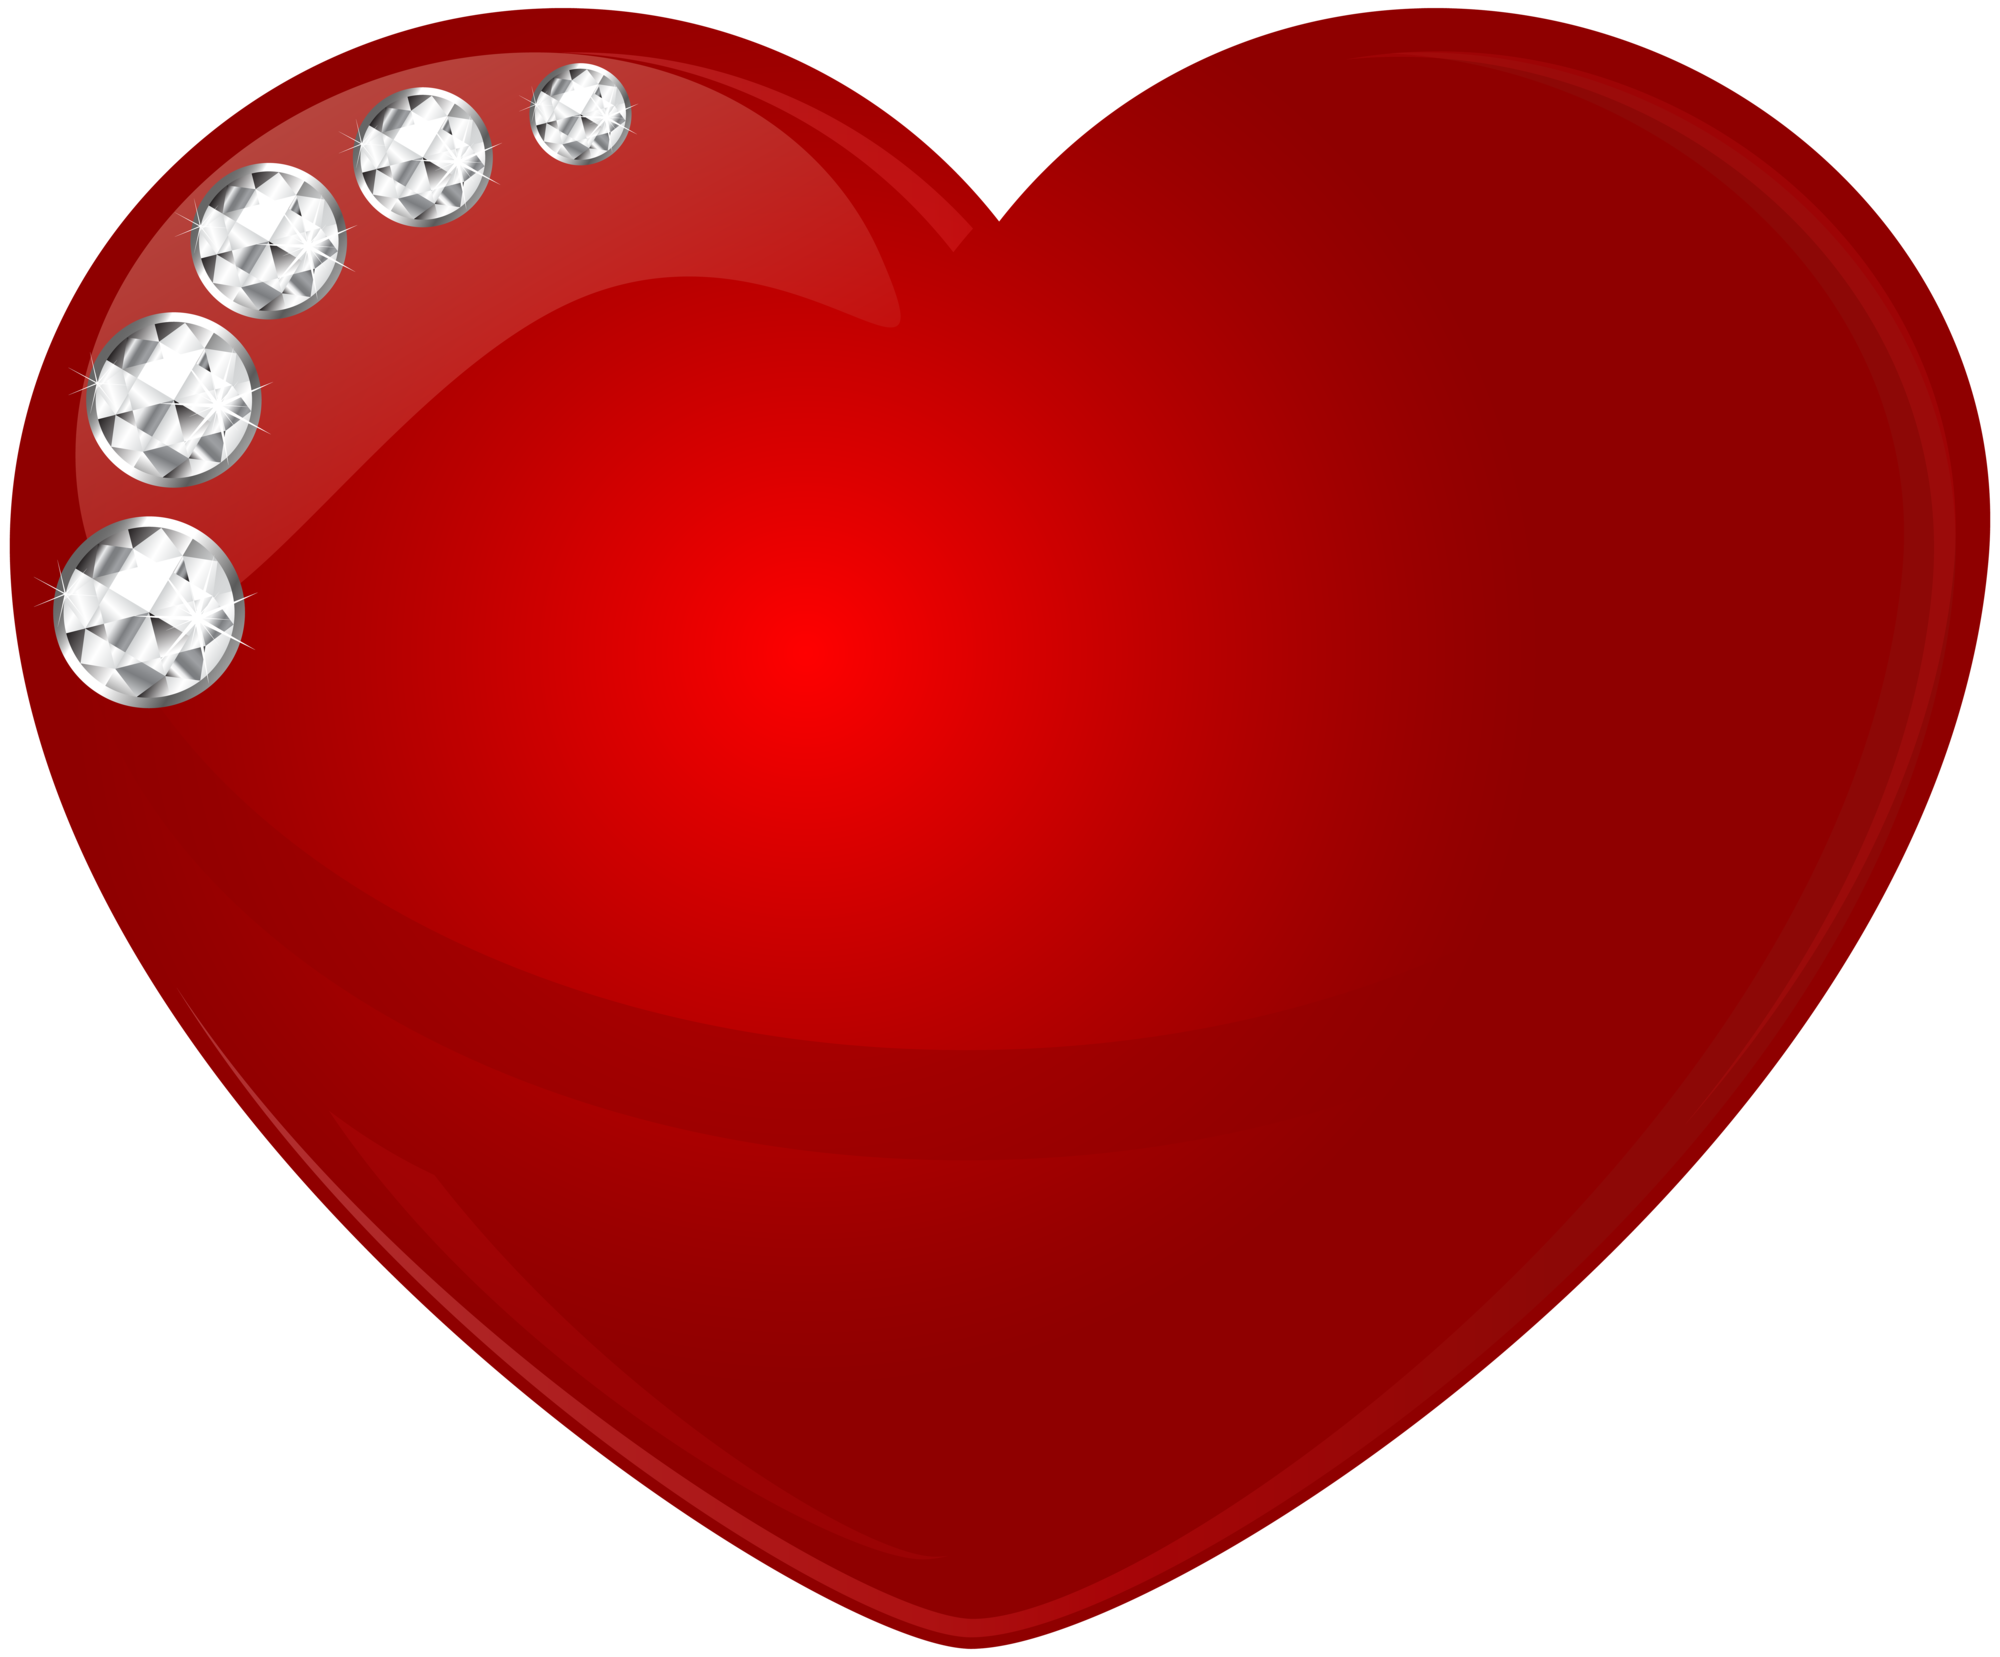 Heart With Diamonds Transparent Clip Art Image